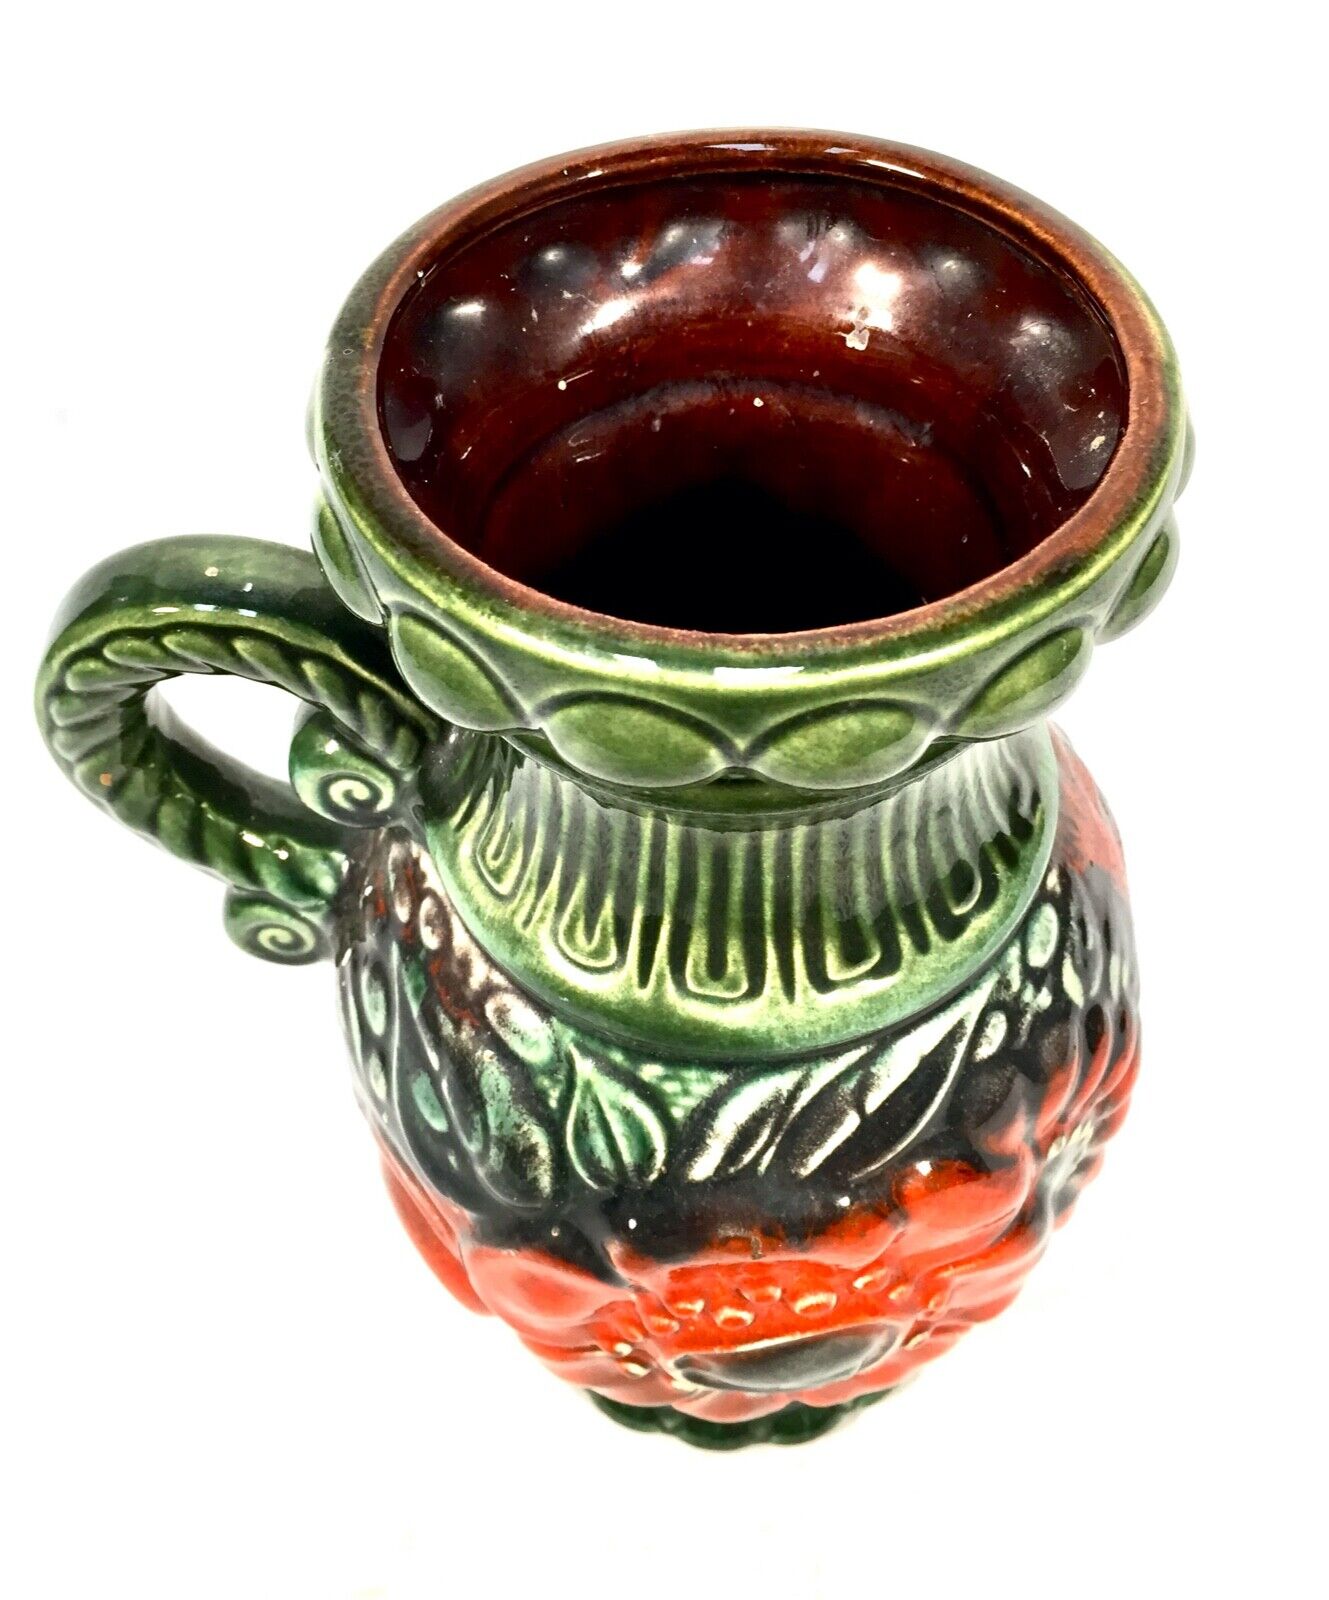 Vintage West German Pottery Vase / Jug / Green & Red / 1970s Retro